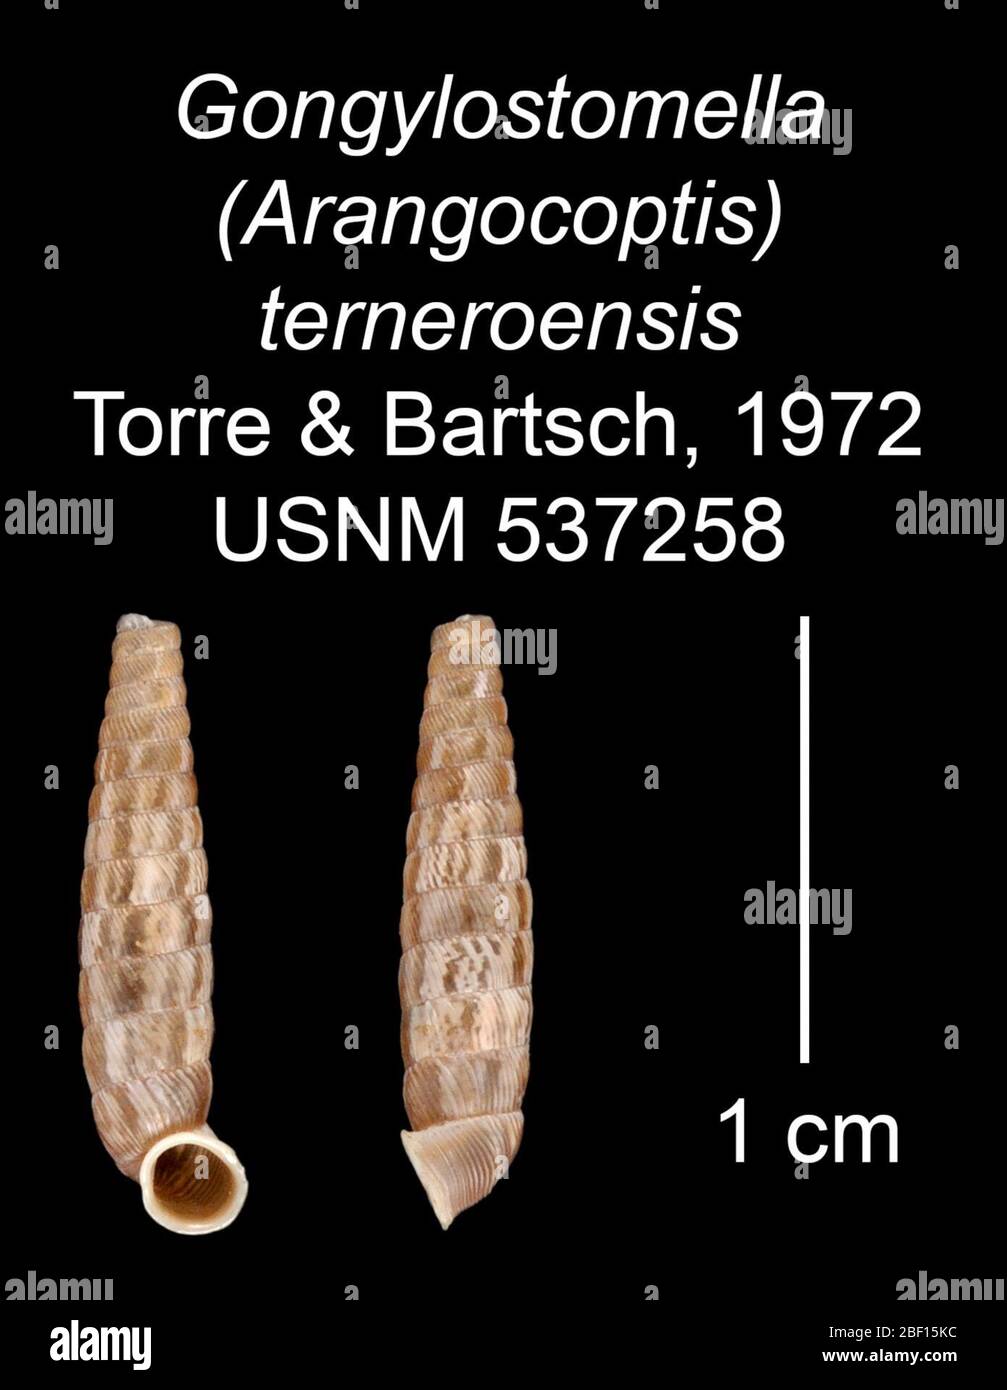 Gongylostomella Arangocoptis terneroensis. 20 Jan 20161 Stock Photo